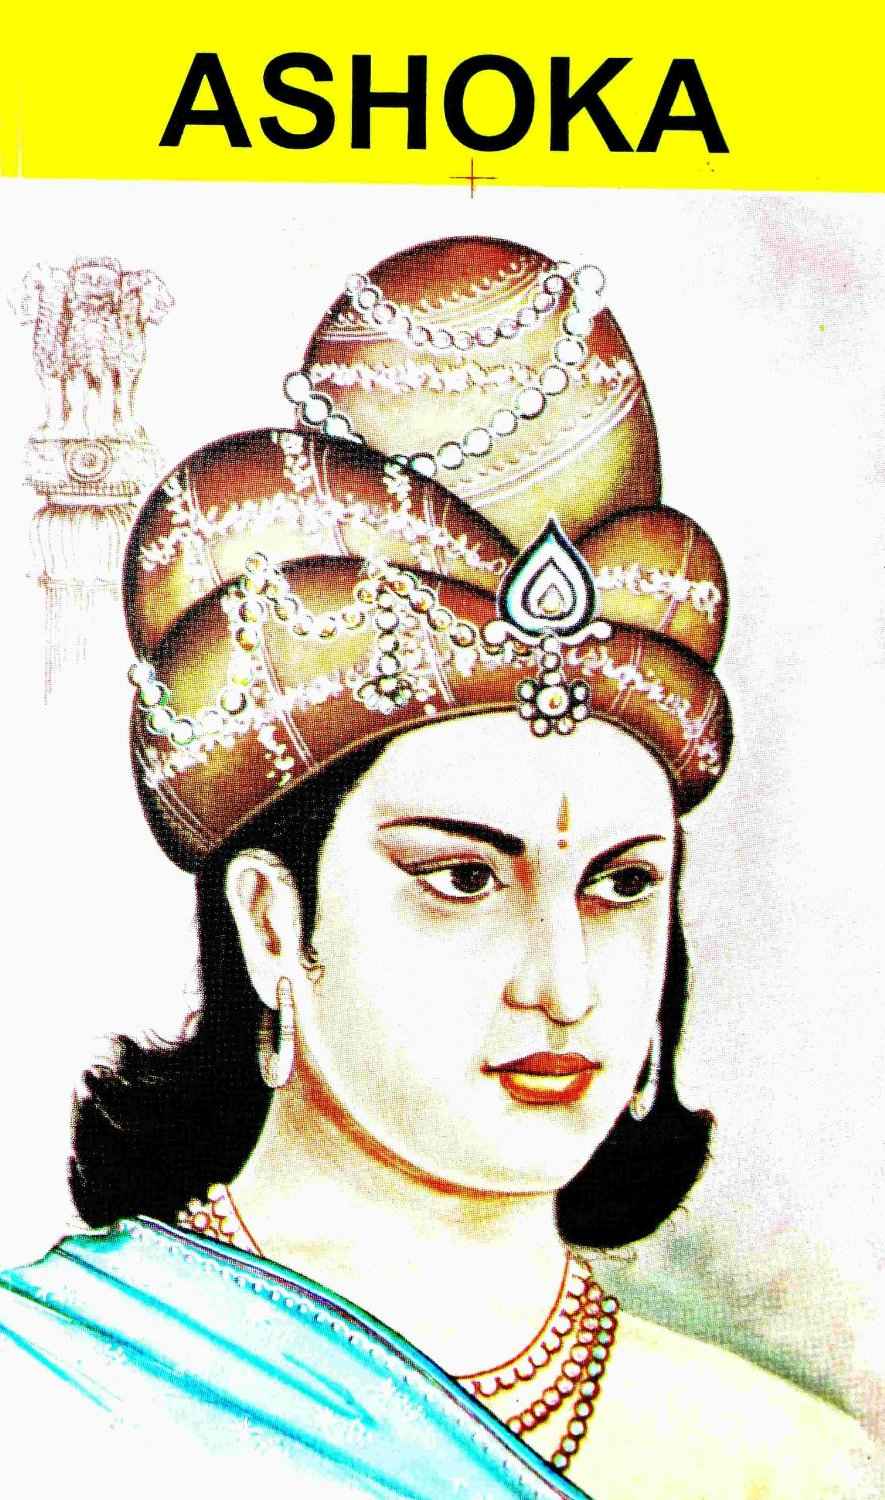 Ashoka, the grandson of Chandragupta Maurya